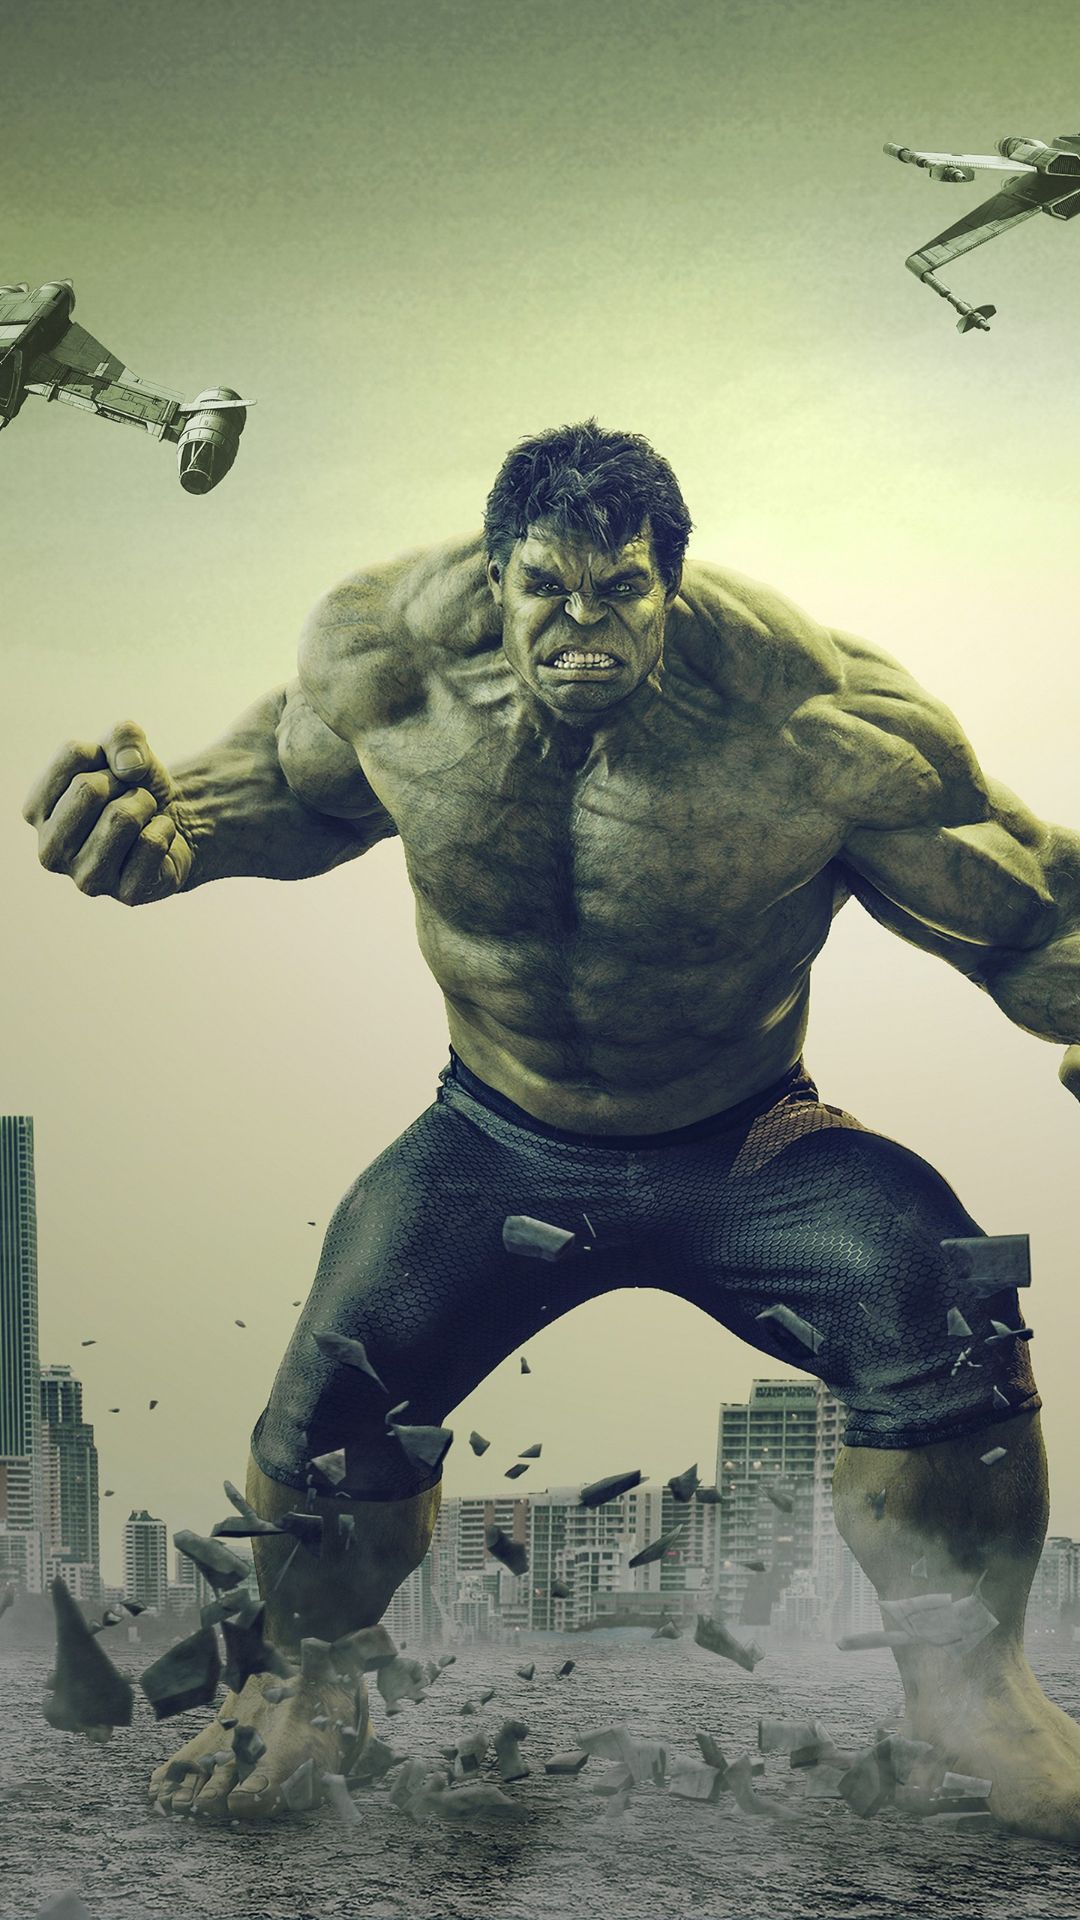 35+ Best Hulk HD Wallpapers [ Ultra HD ]